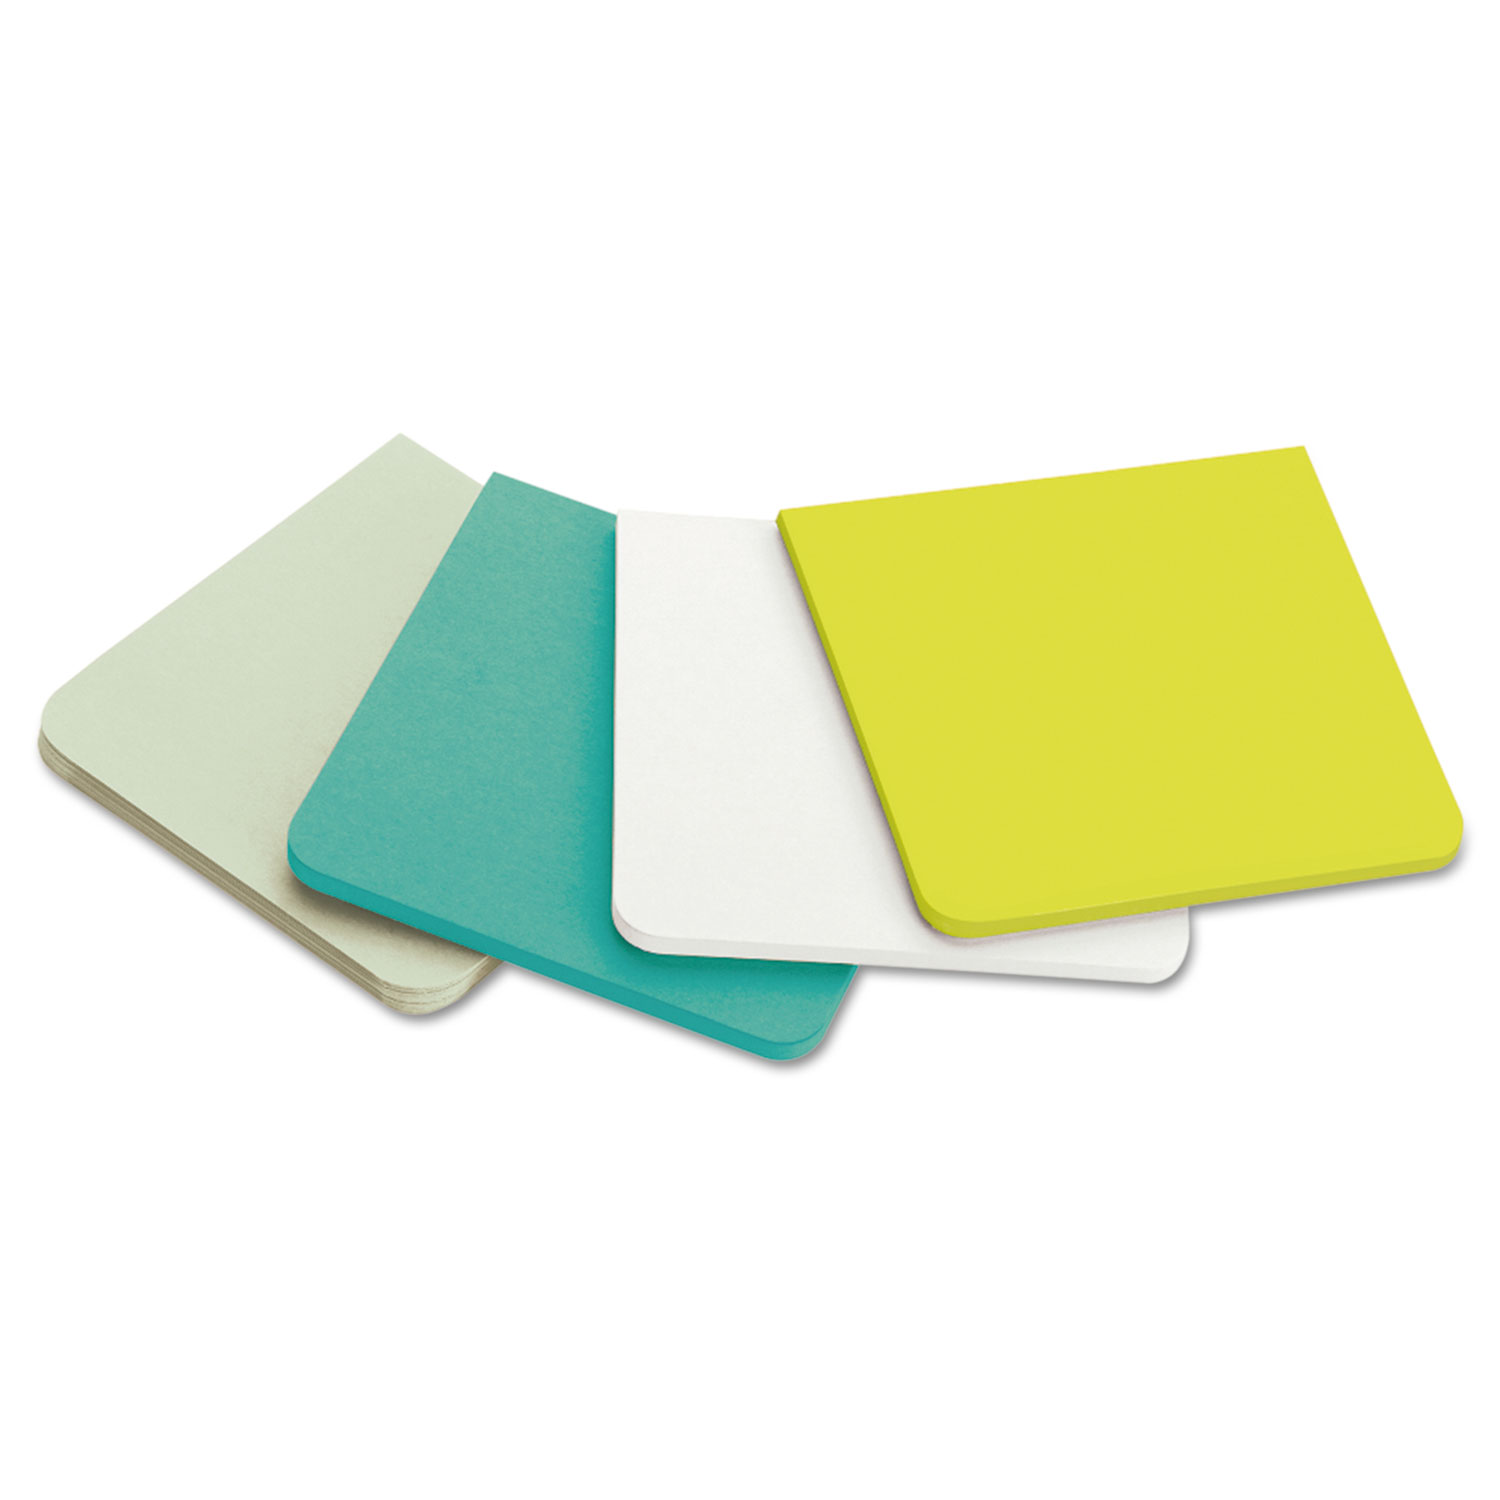 Full Adhesive Notes, 2 x 2, Assorted Bora Bora Colors, 25-Sheet, 8/Pack